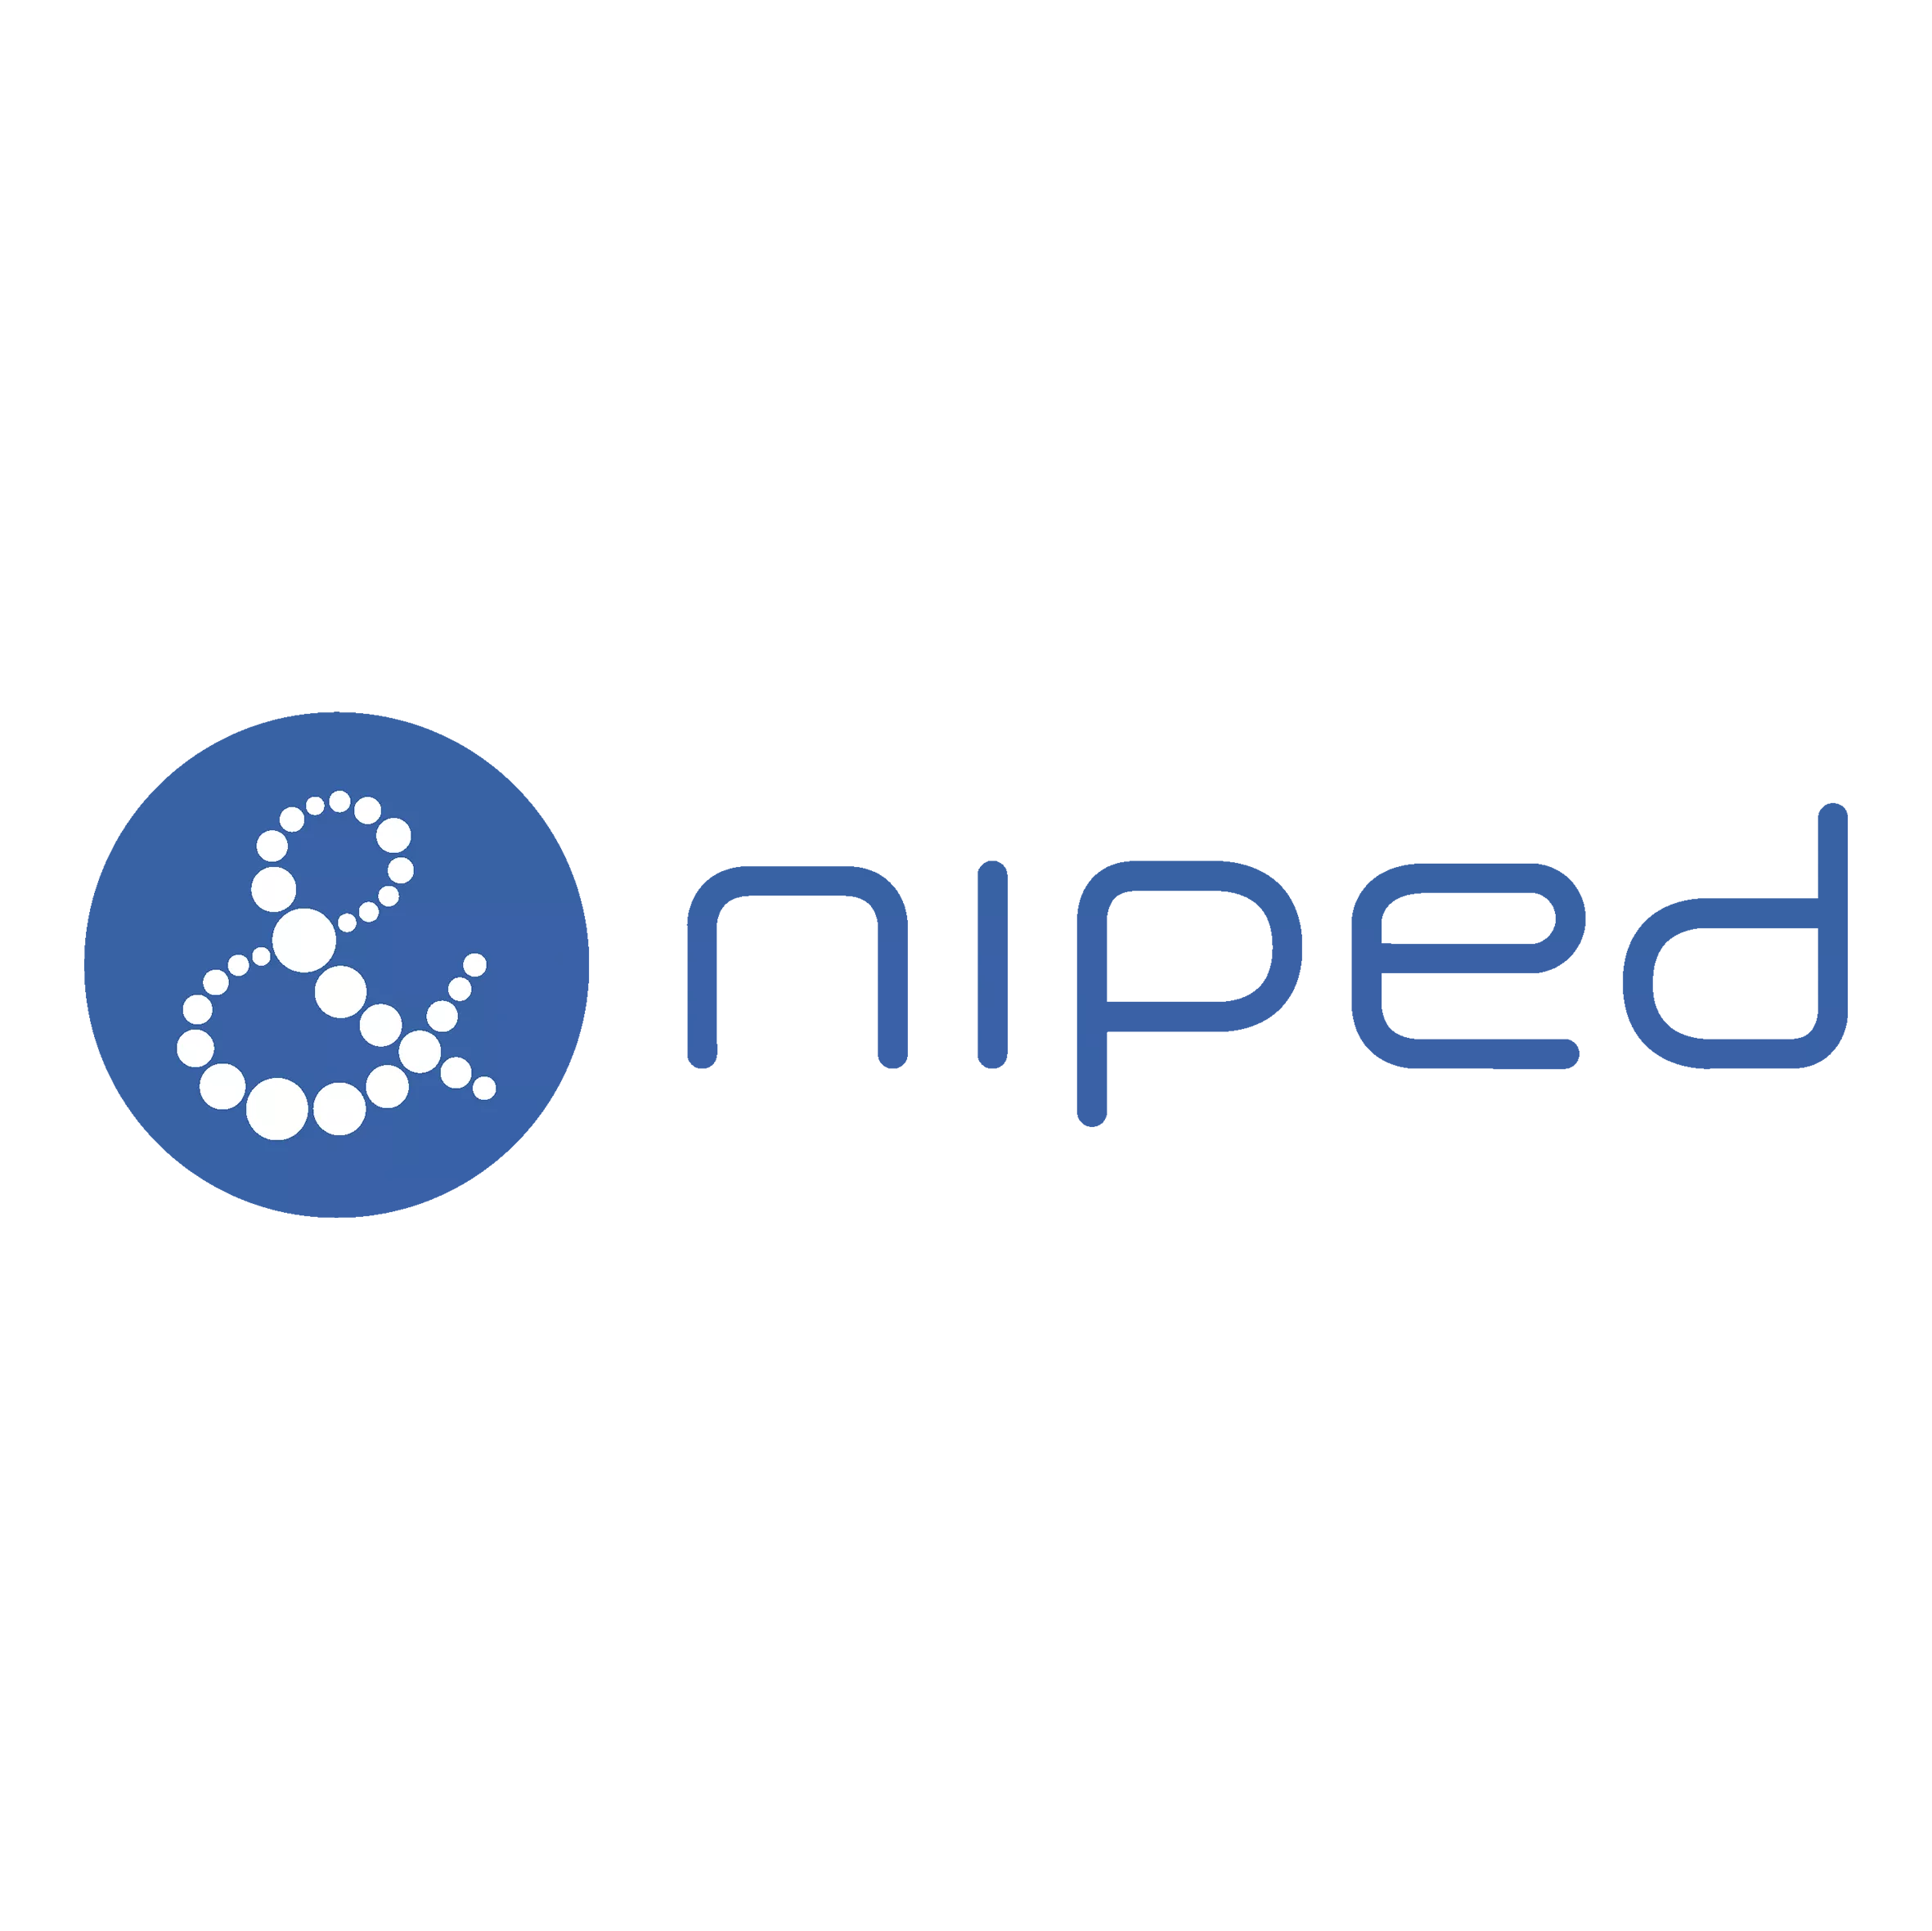 &niped logo